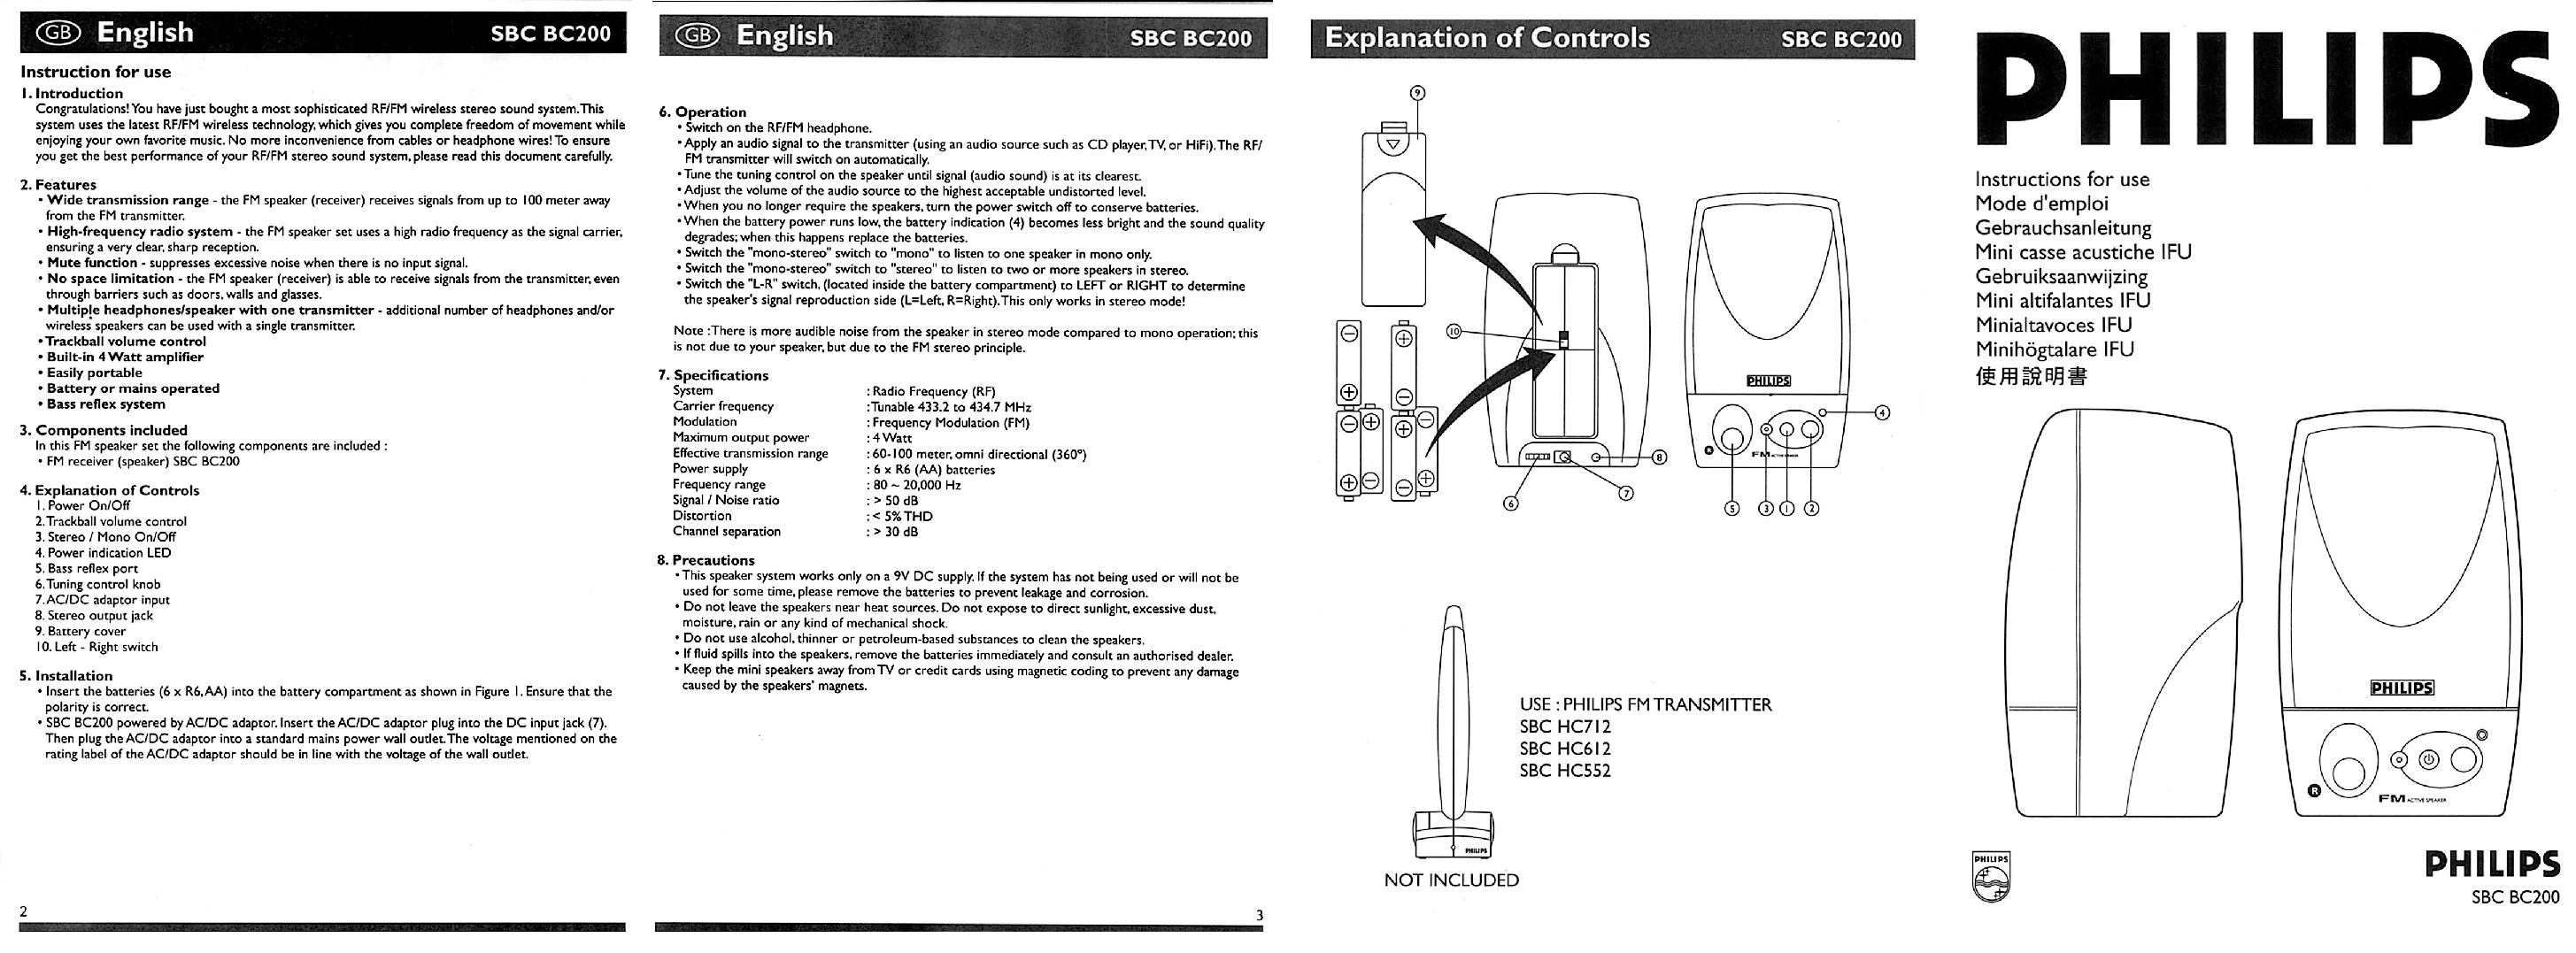 Philips SBC HC552, SBC HC712, SBC HC612, SBC BA200 User Manual